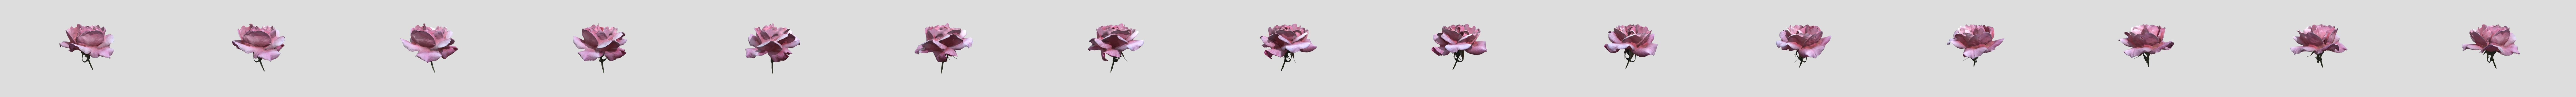 rose petal 3d ma